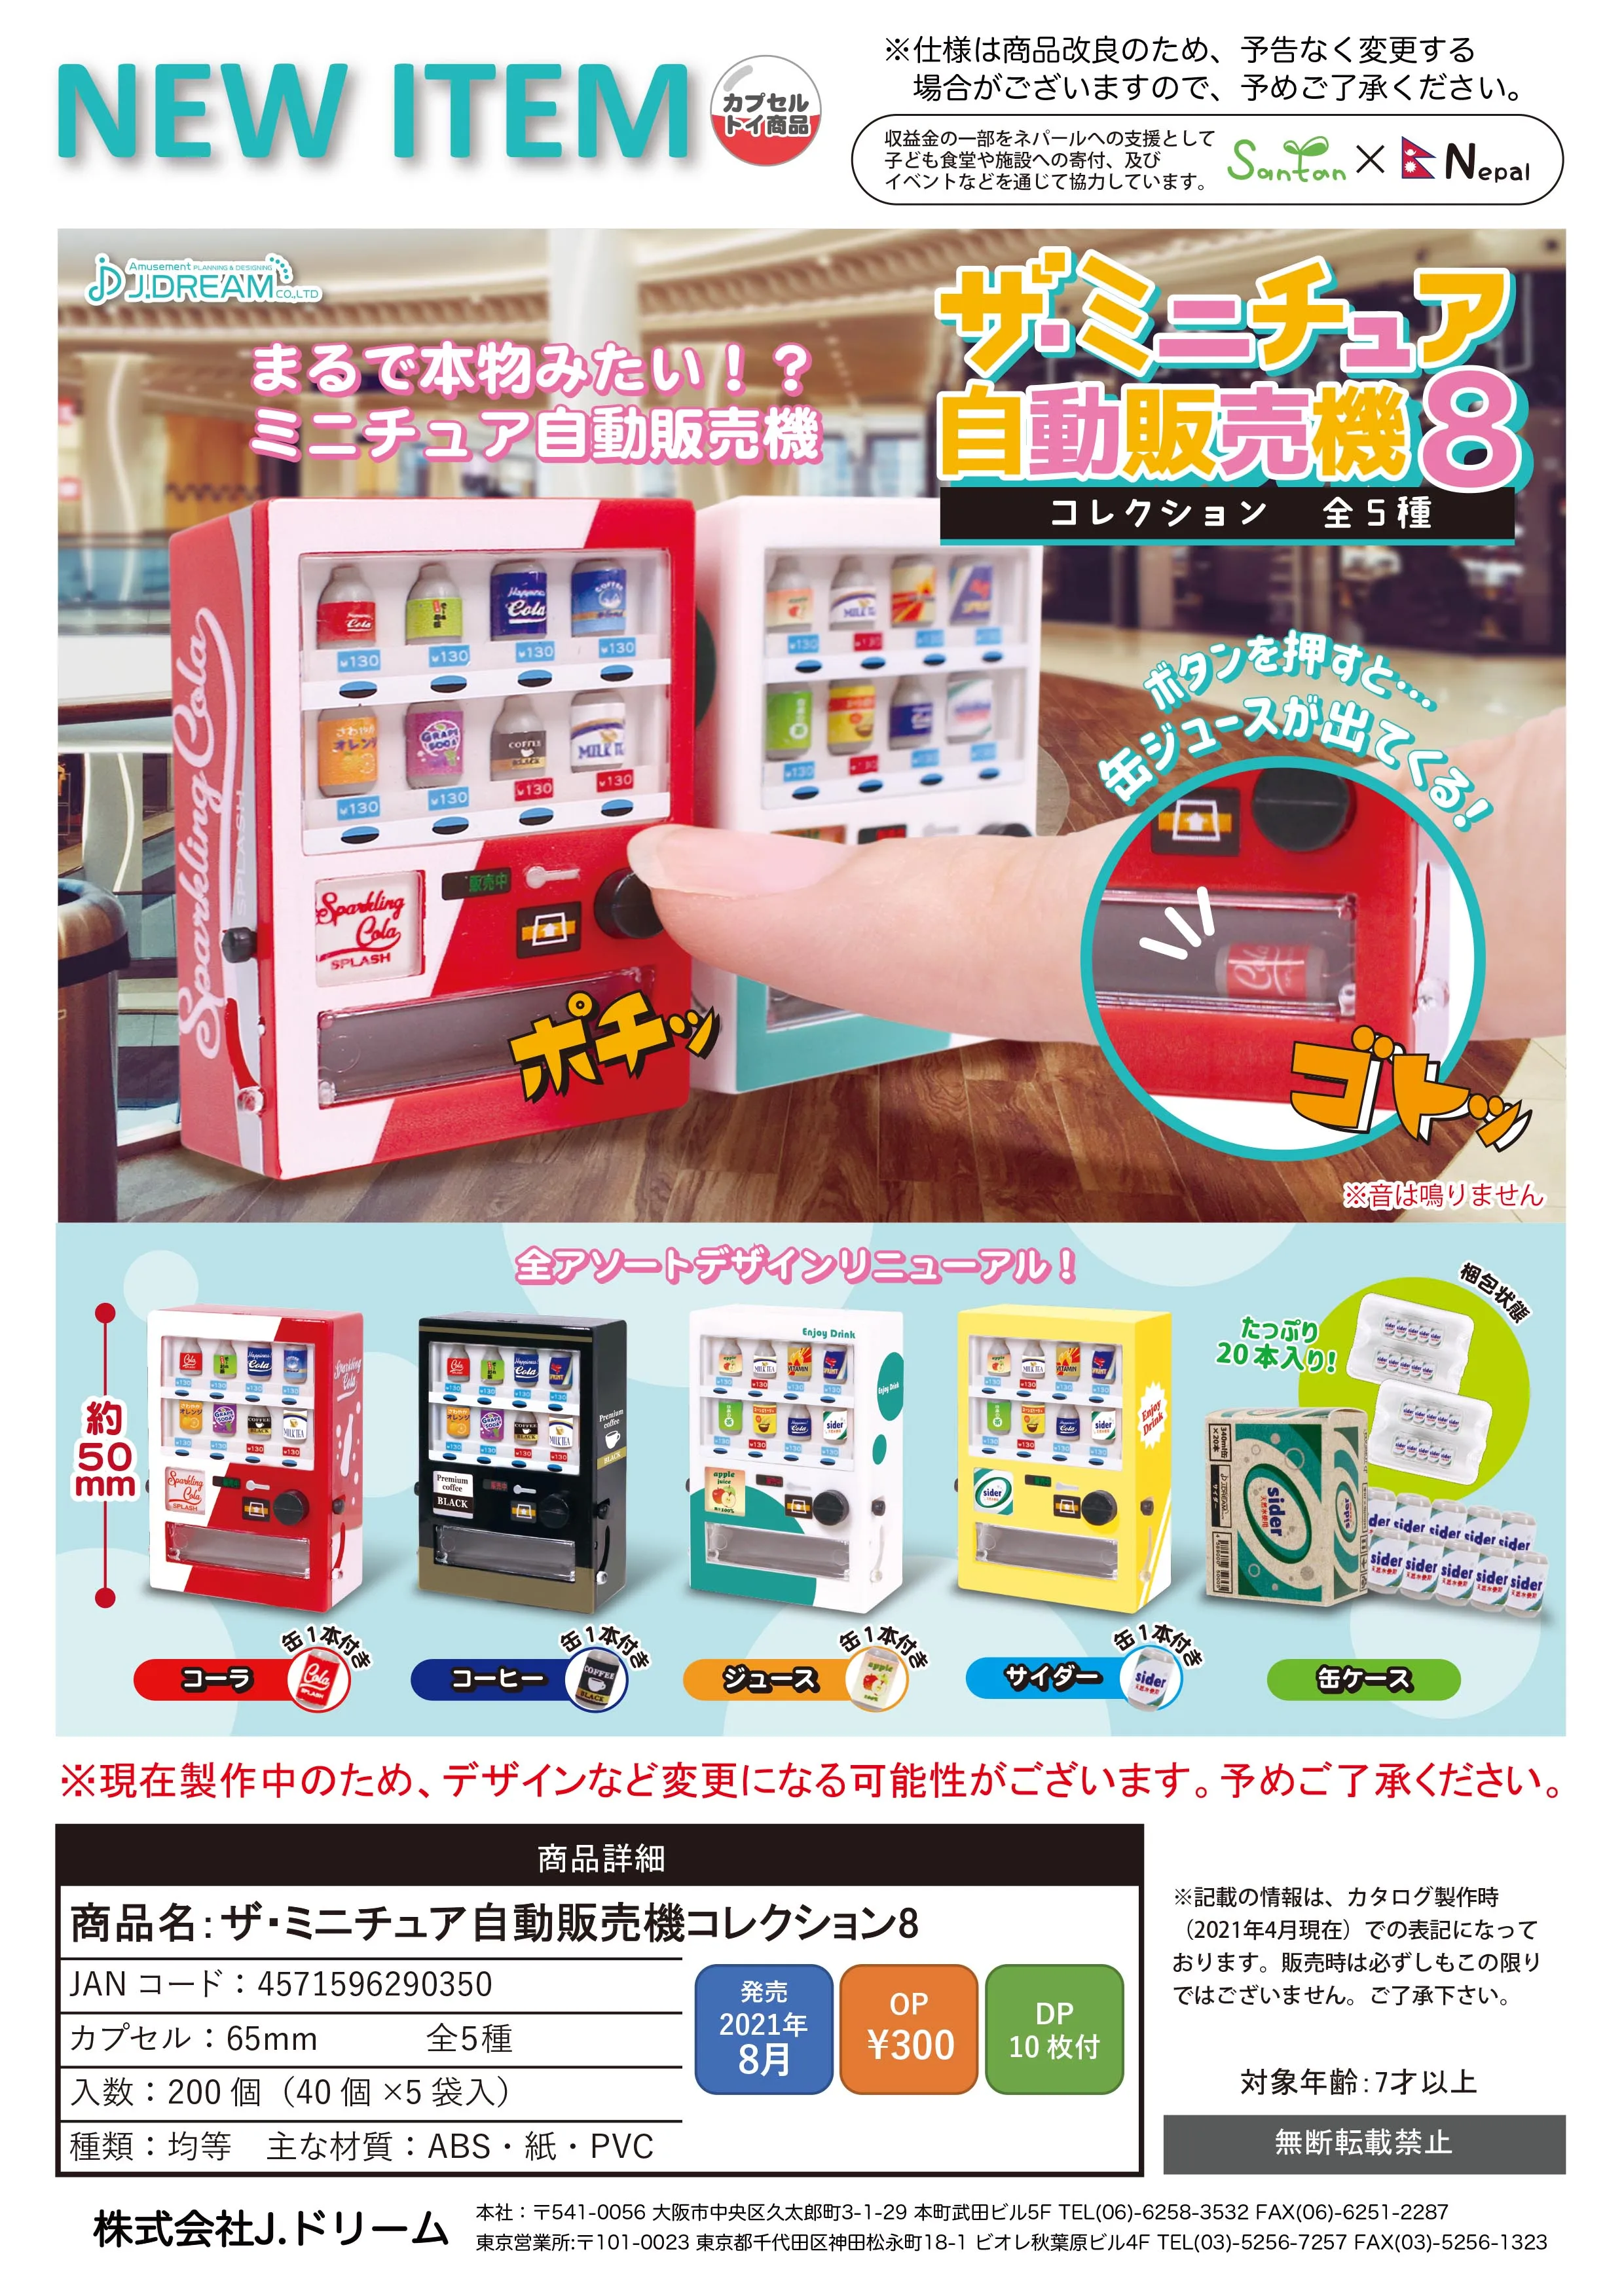 Gachapon Capsule Toy J-DREAM Gashapon Miniature Table Ornaments Mini Vending Machines Model Collectible